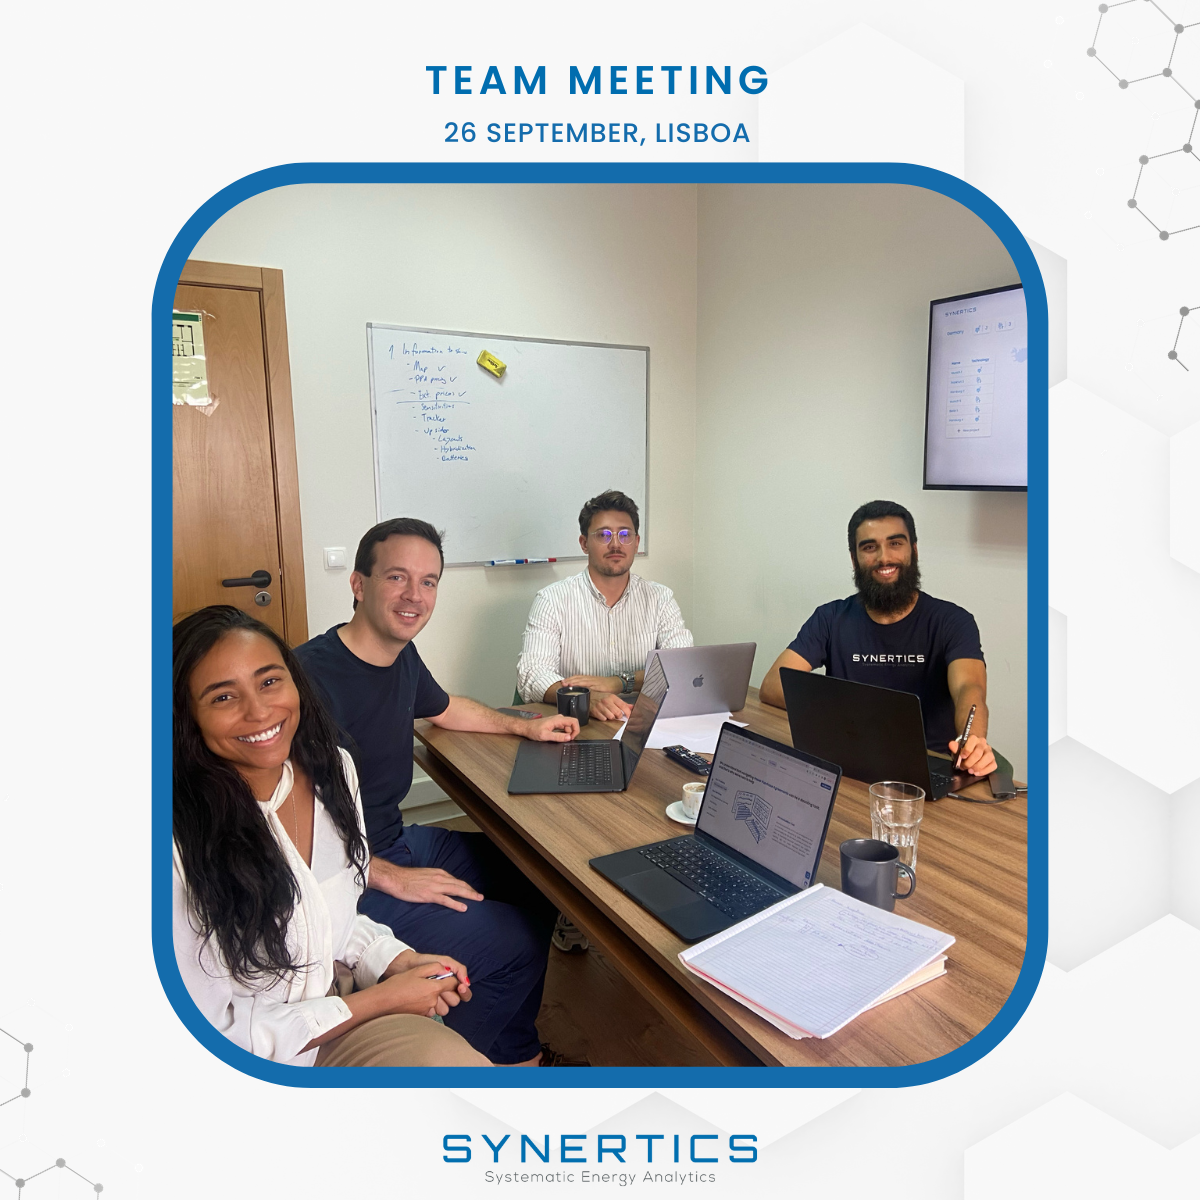 Synertics team meeting in Lisbon